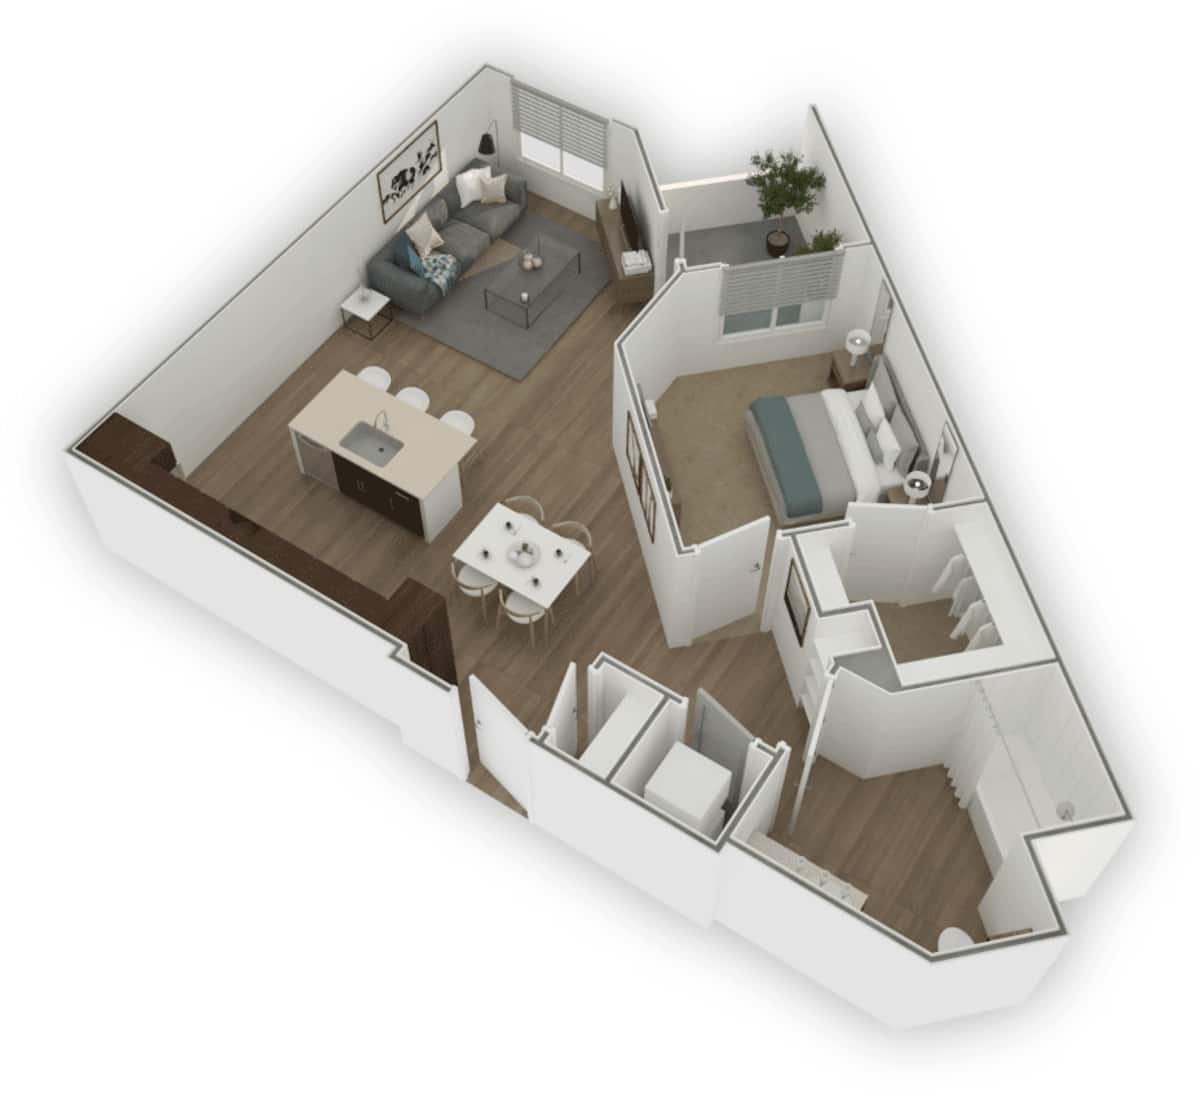 Floorplan diagram for B, showing 1 bedroom